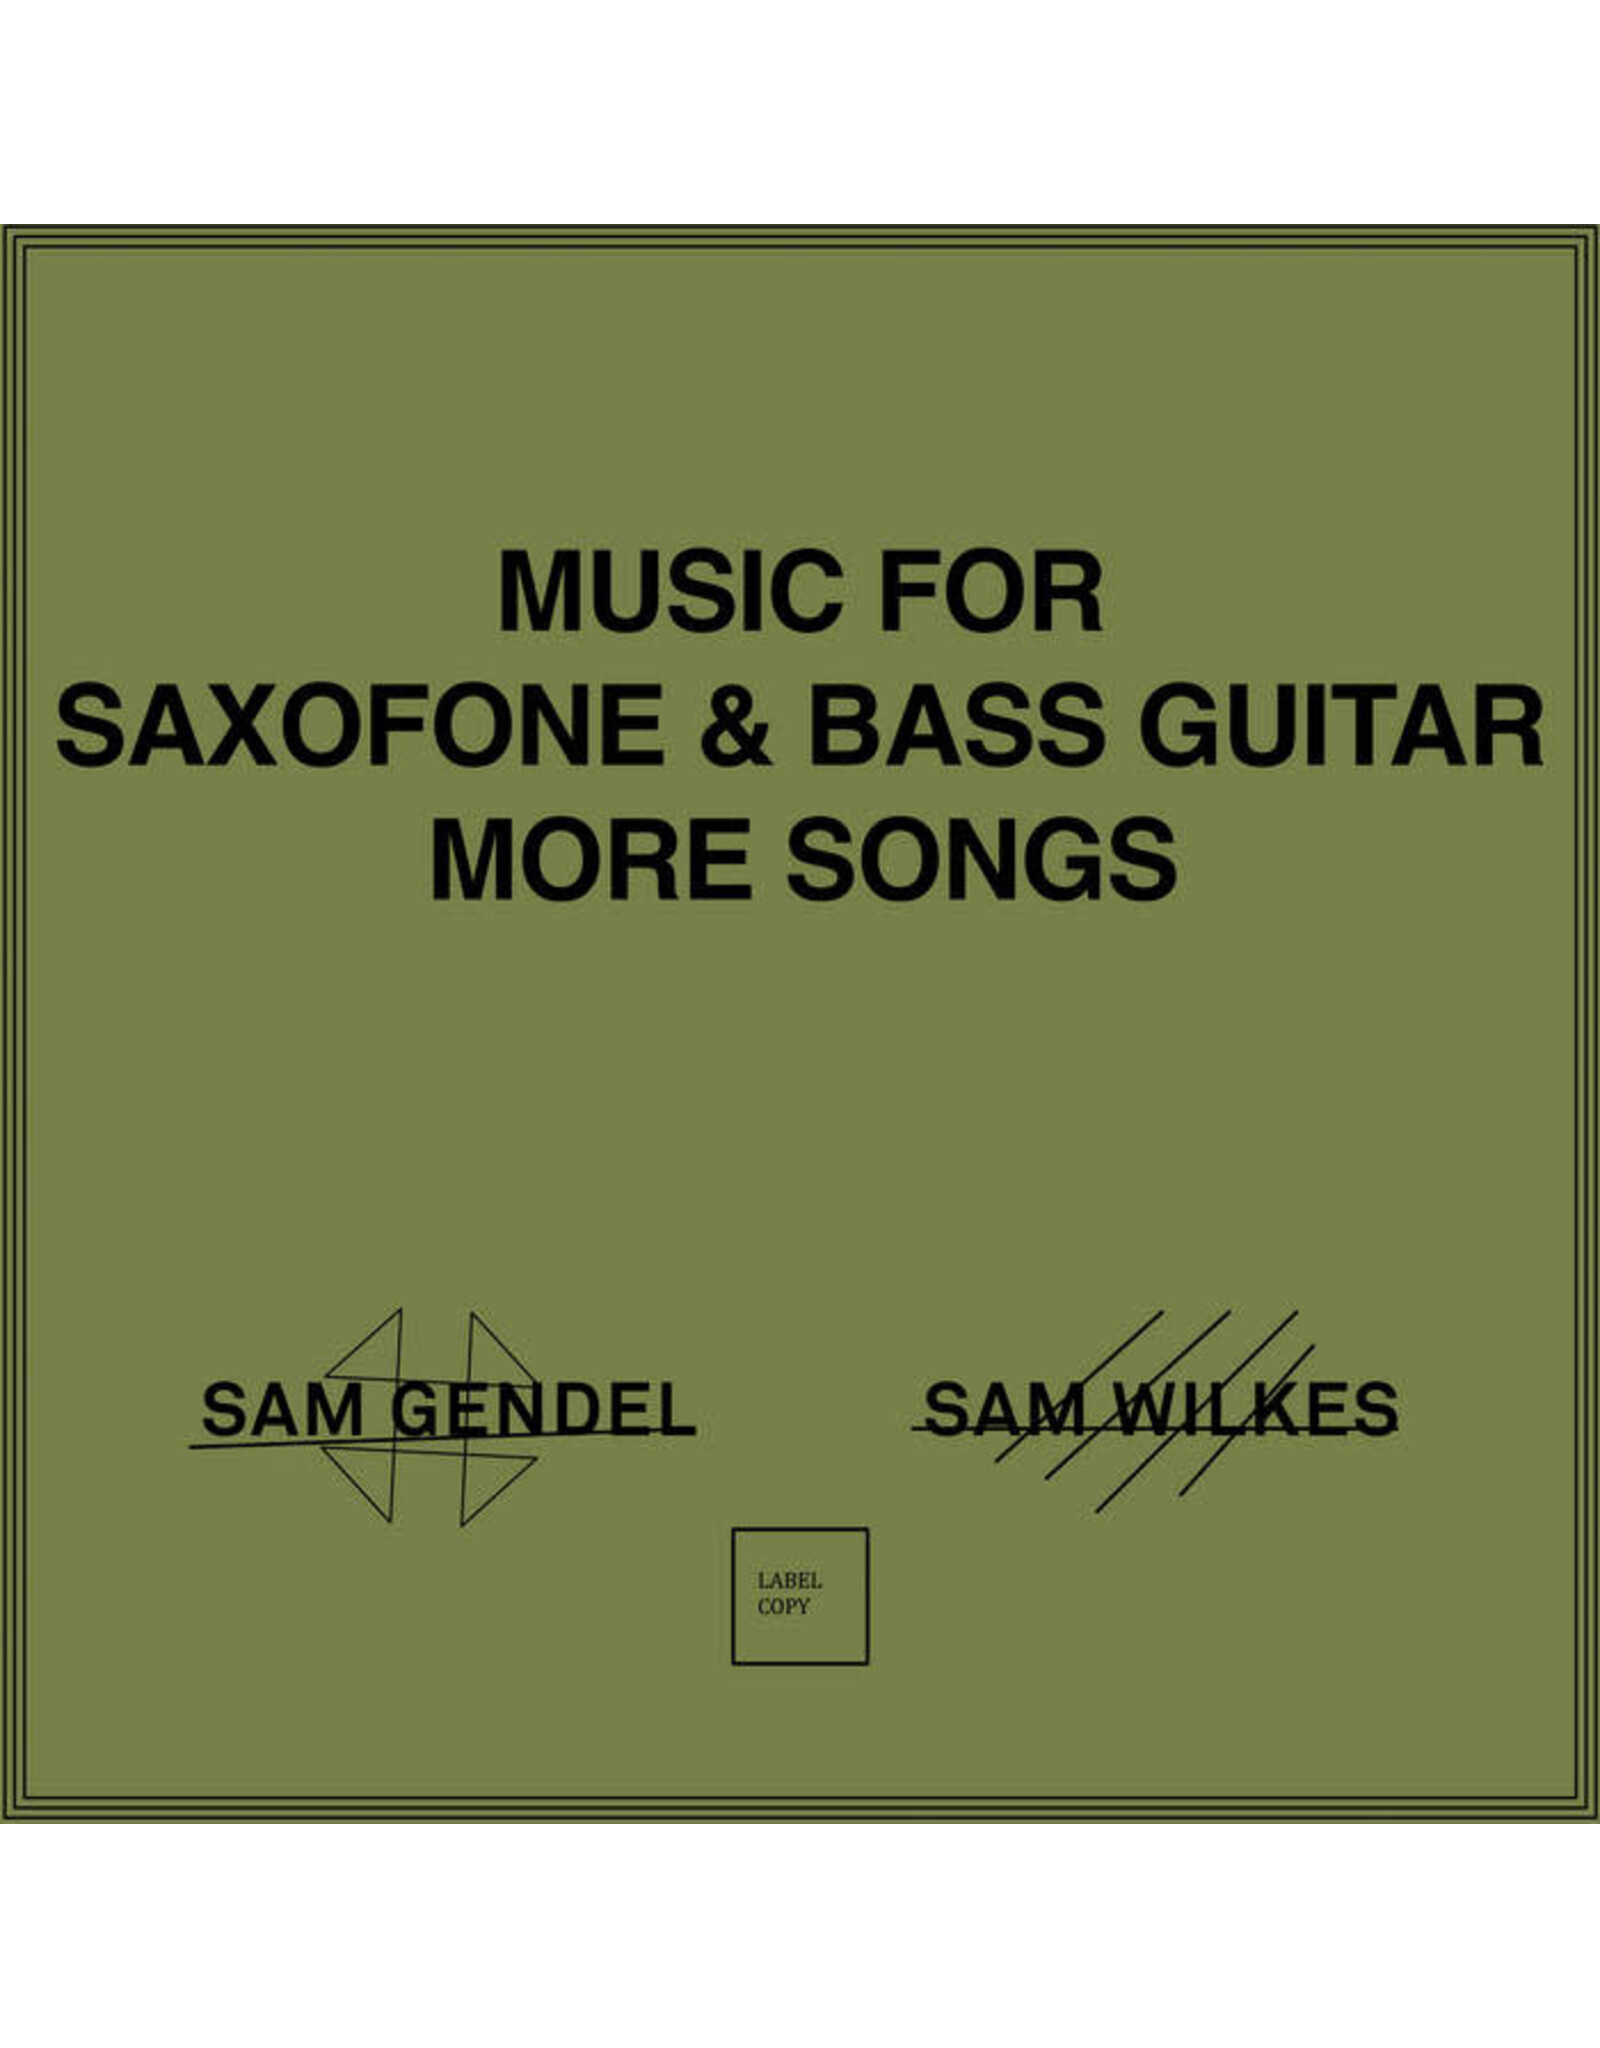 Leaving Gendel, Sam & Sam Wilkes: Music for Saxofone and Bass Guitar More Songs LP